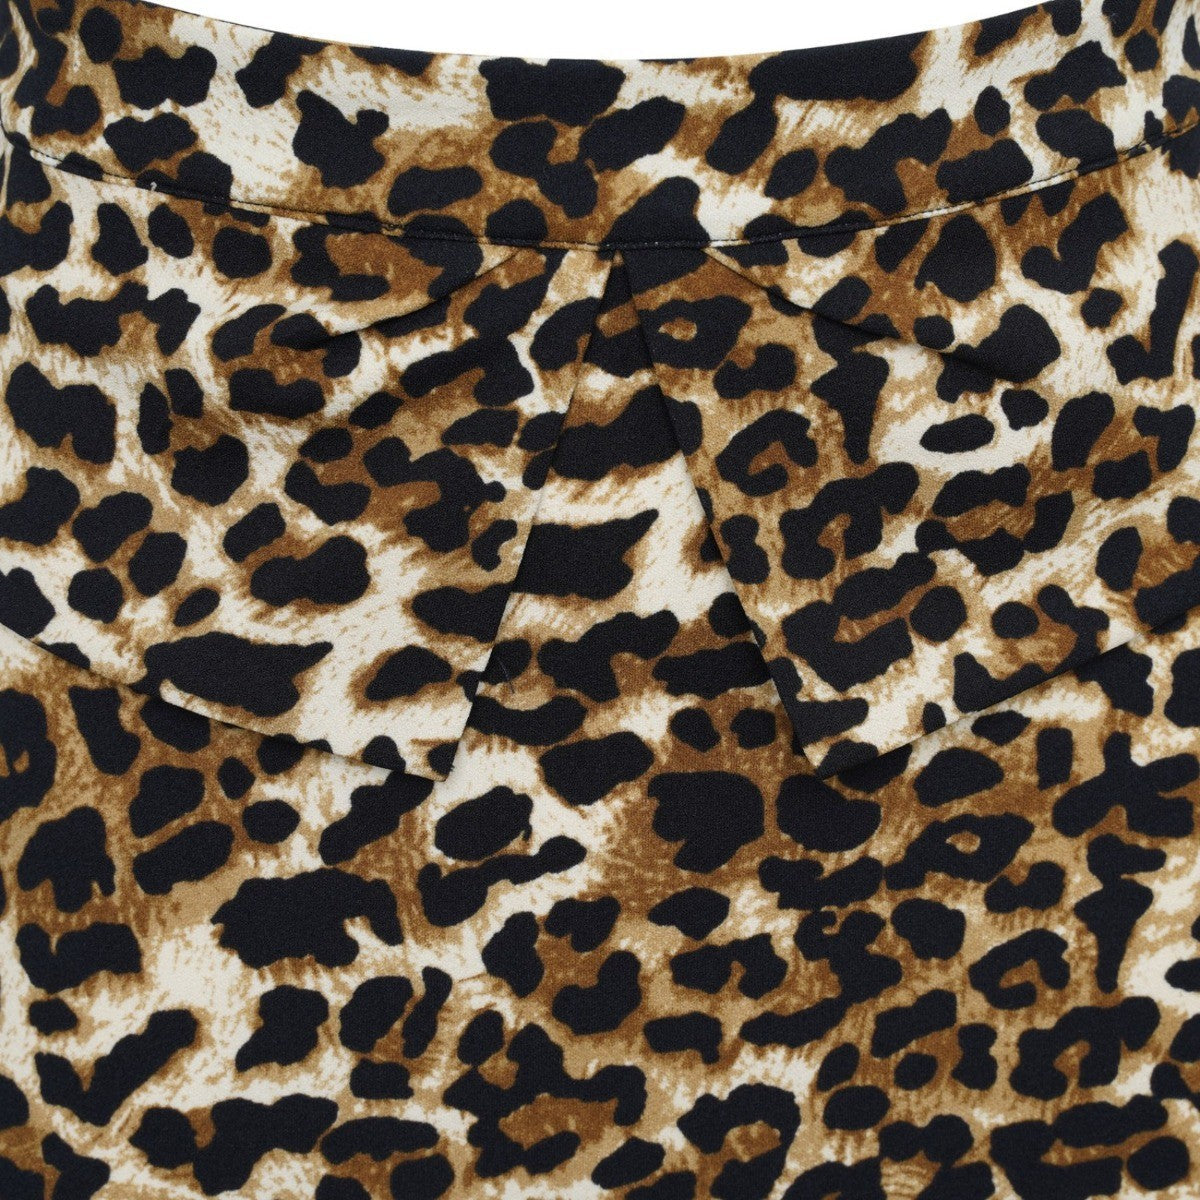 Ro Rox Joan 1950's Retro Vintage Style Pencil Skirt, Leopard